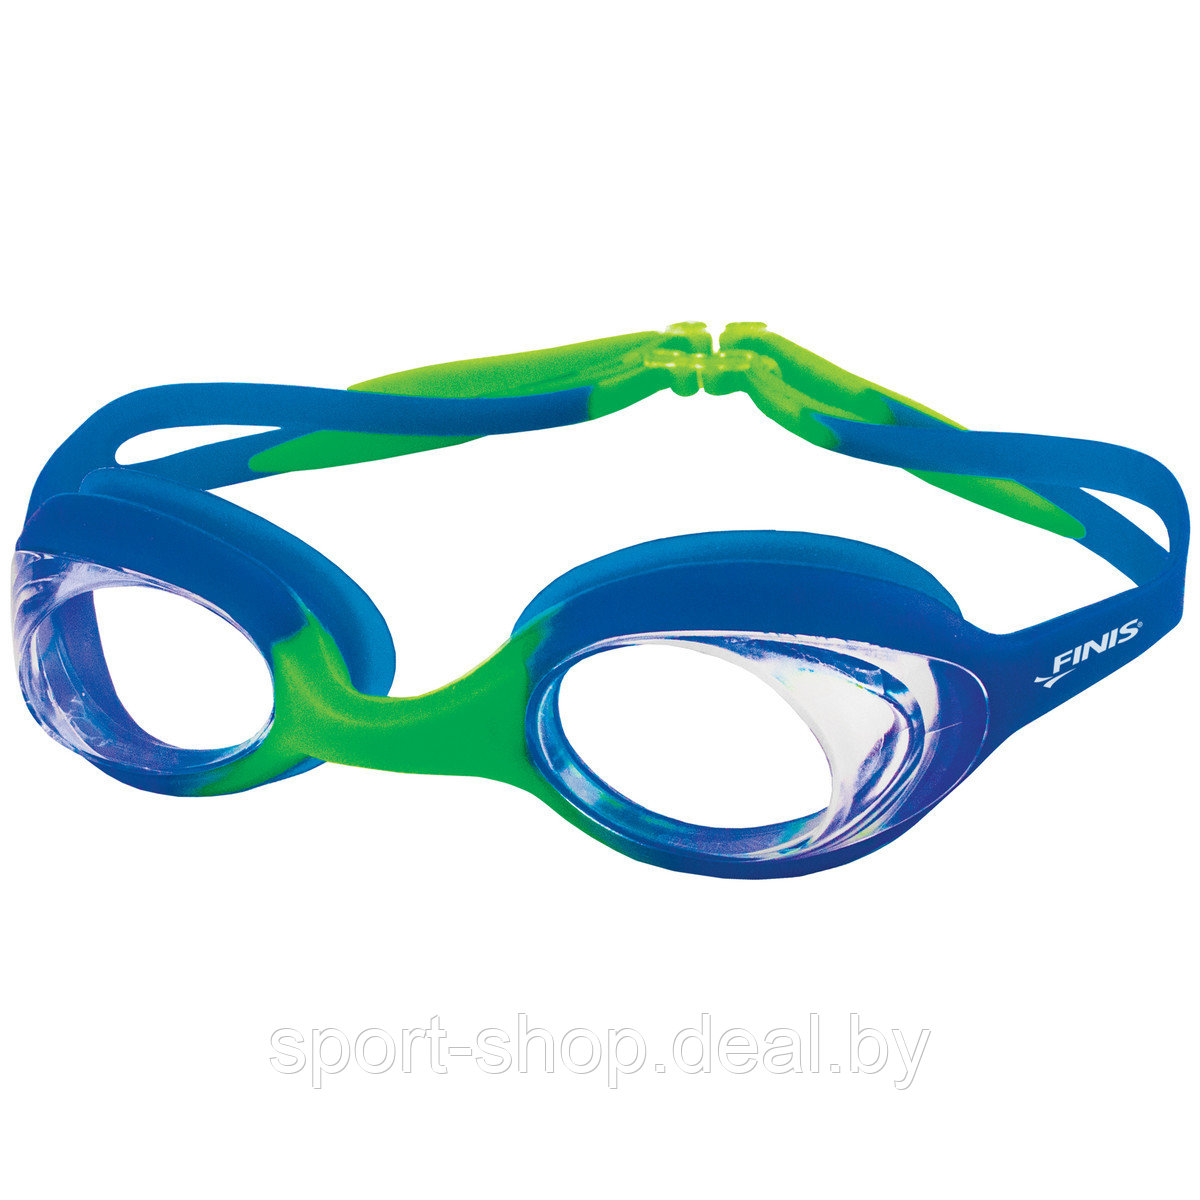 Детские очки для плавания FINIS Blue Green/Clear 3.45.011.162, очки для плавания, очки для плавания в бассейне